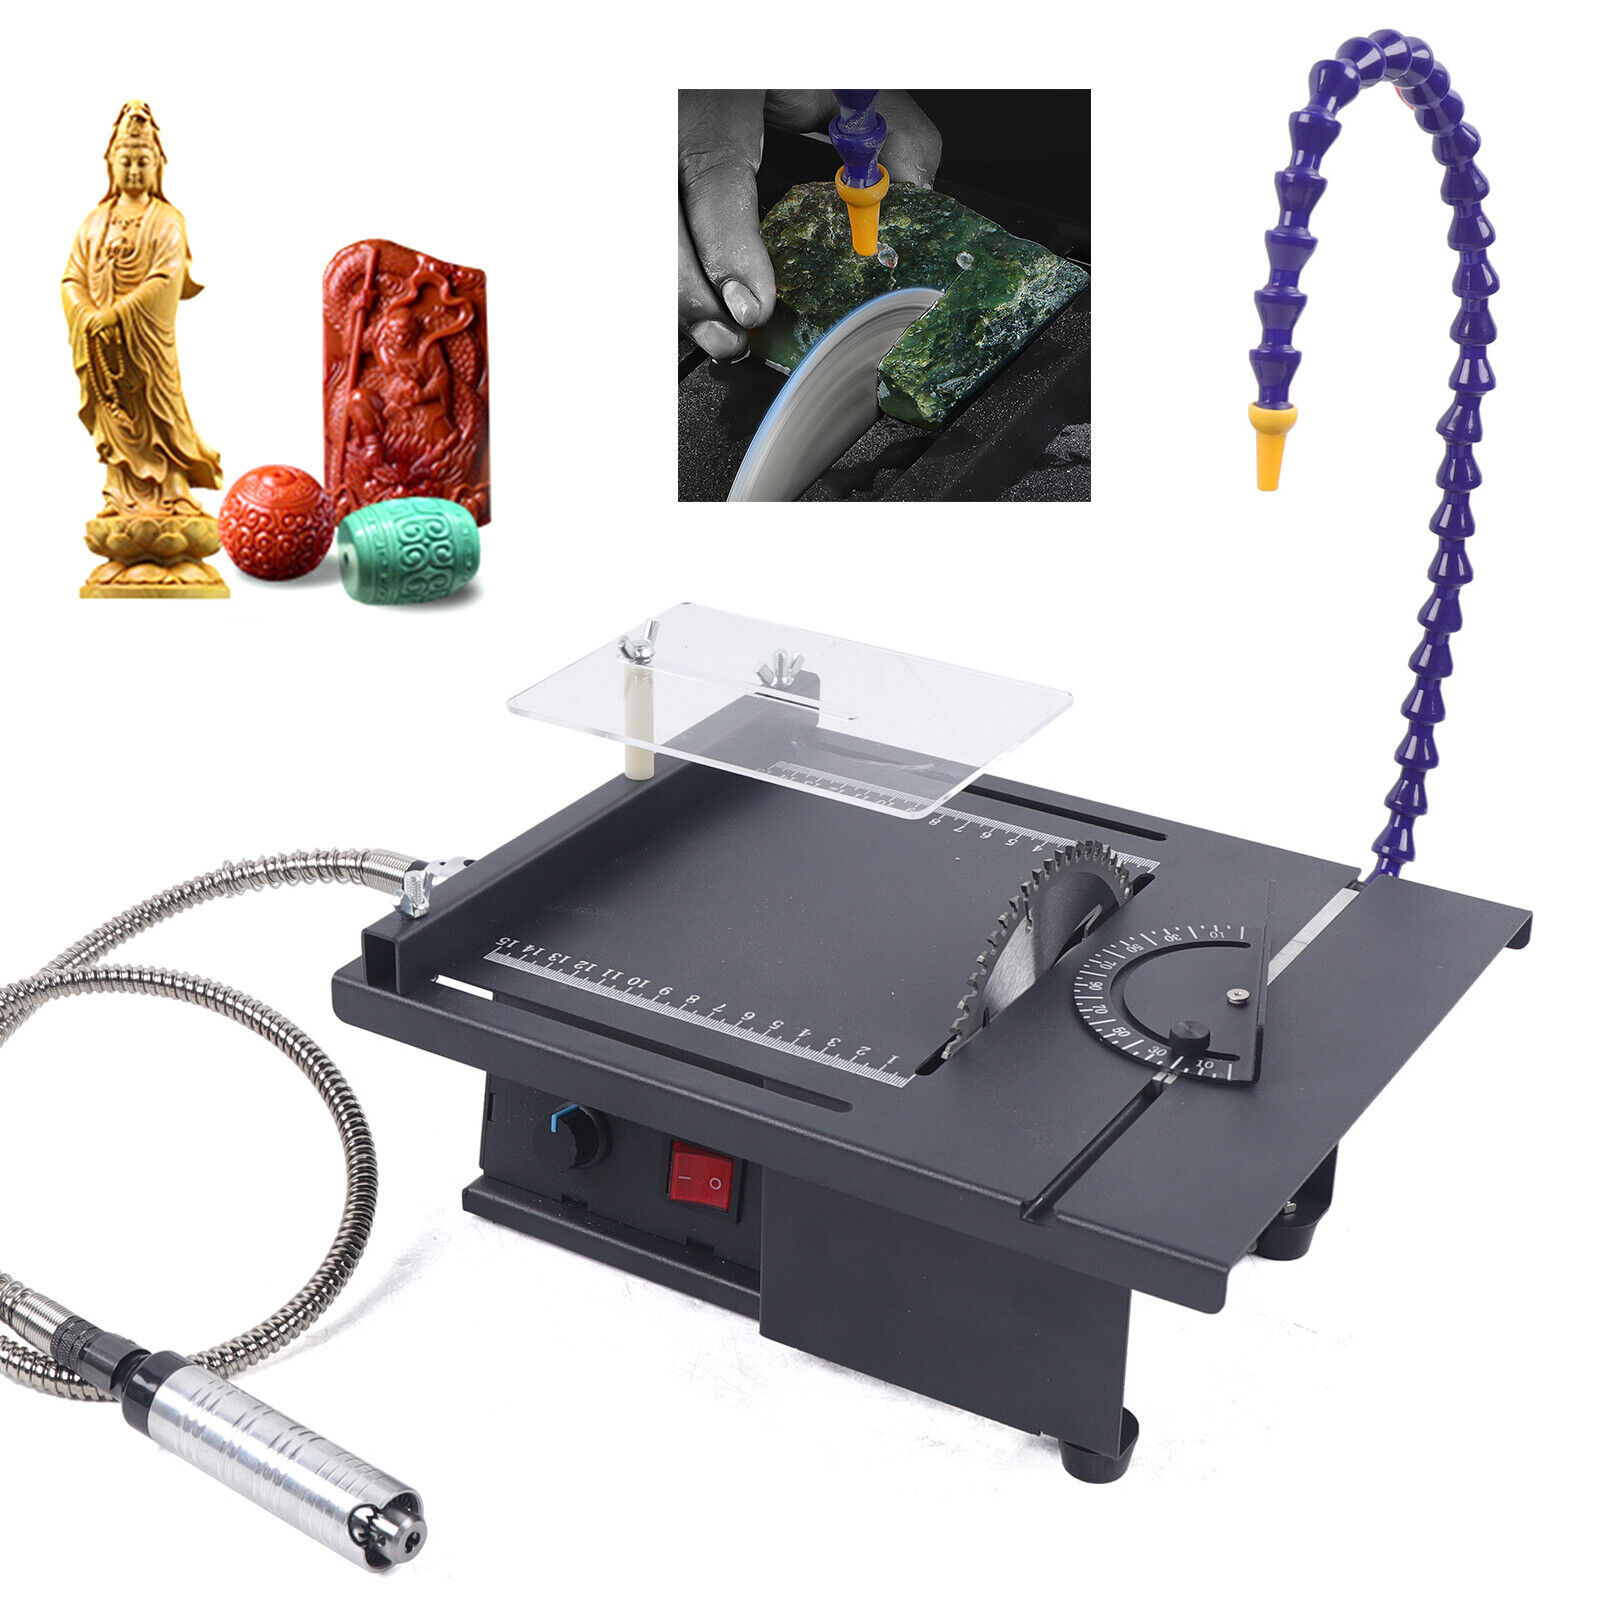 PortableTable Saw,Gem Jewelry Rock Polishing Tool,Jade Cutting Carving Machine